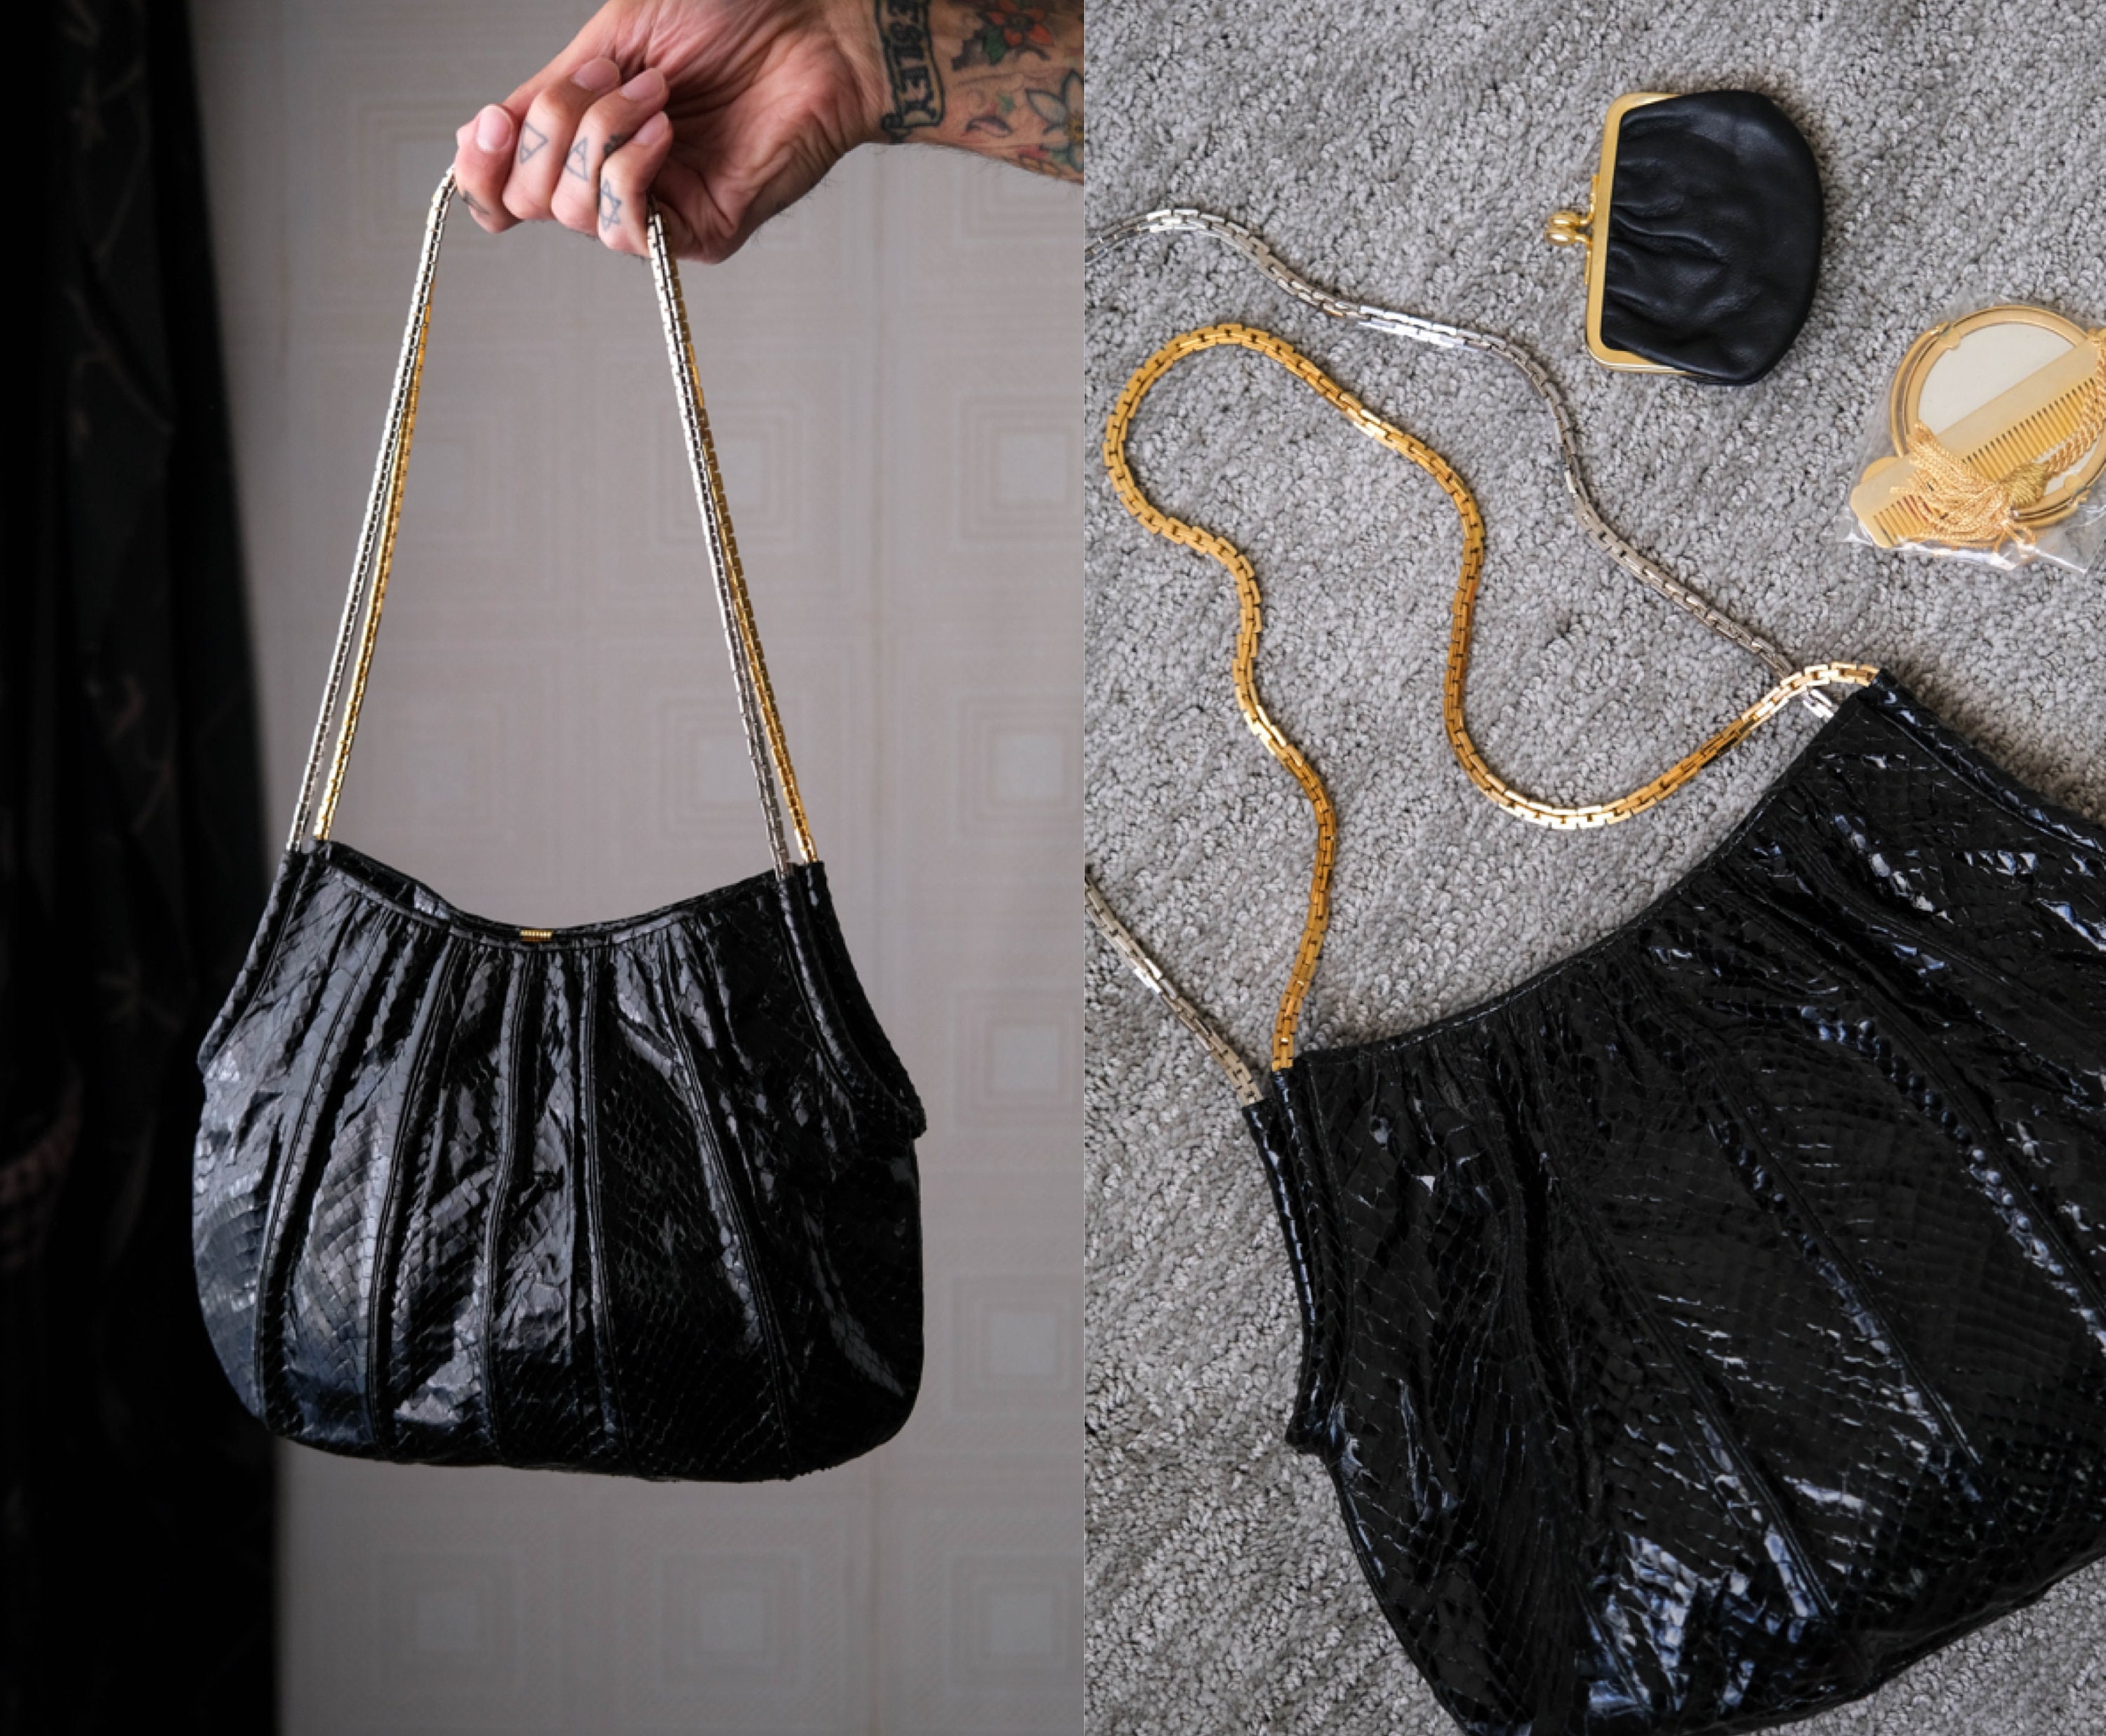 Shop PRADA Nylon Chain Plain Elegant Style Logo Shoulder Bags by flamenco